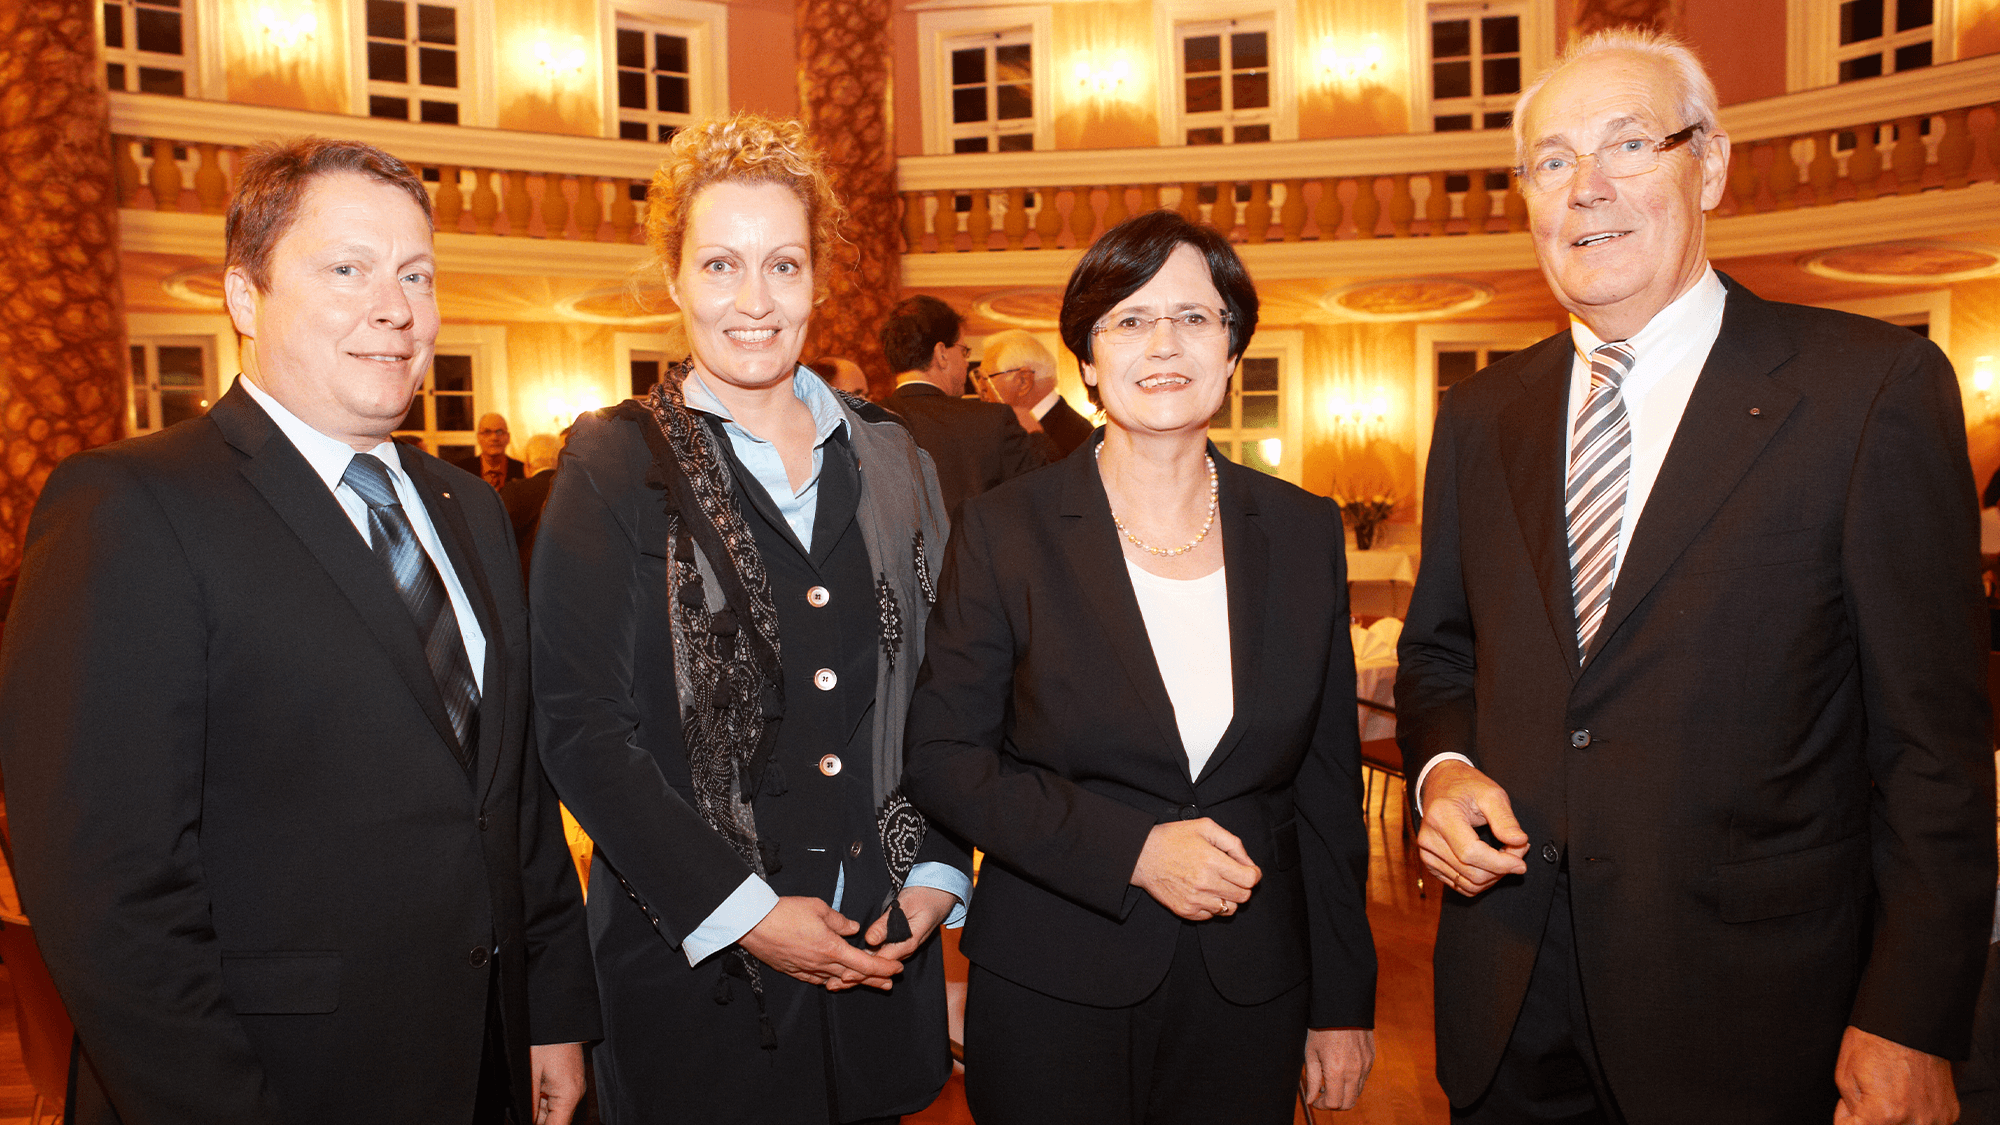 Sven Hohorst, Tordis Eulenberg, Christine Lieberknecht und Wolfgang Hohorst, 2012